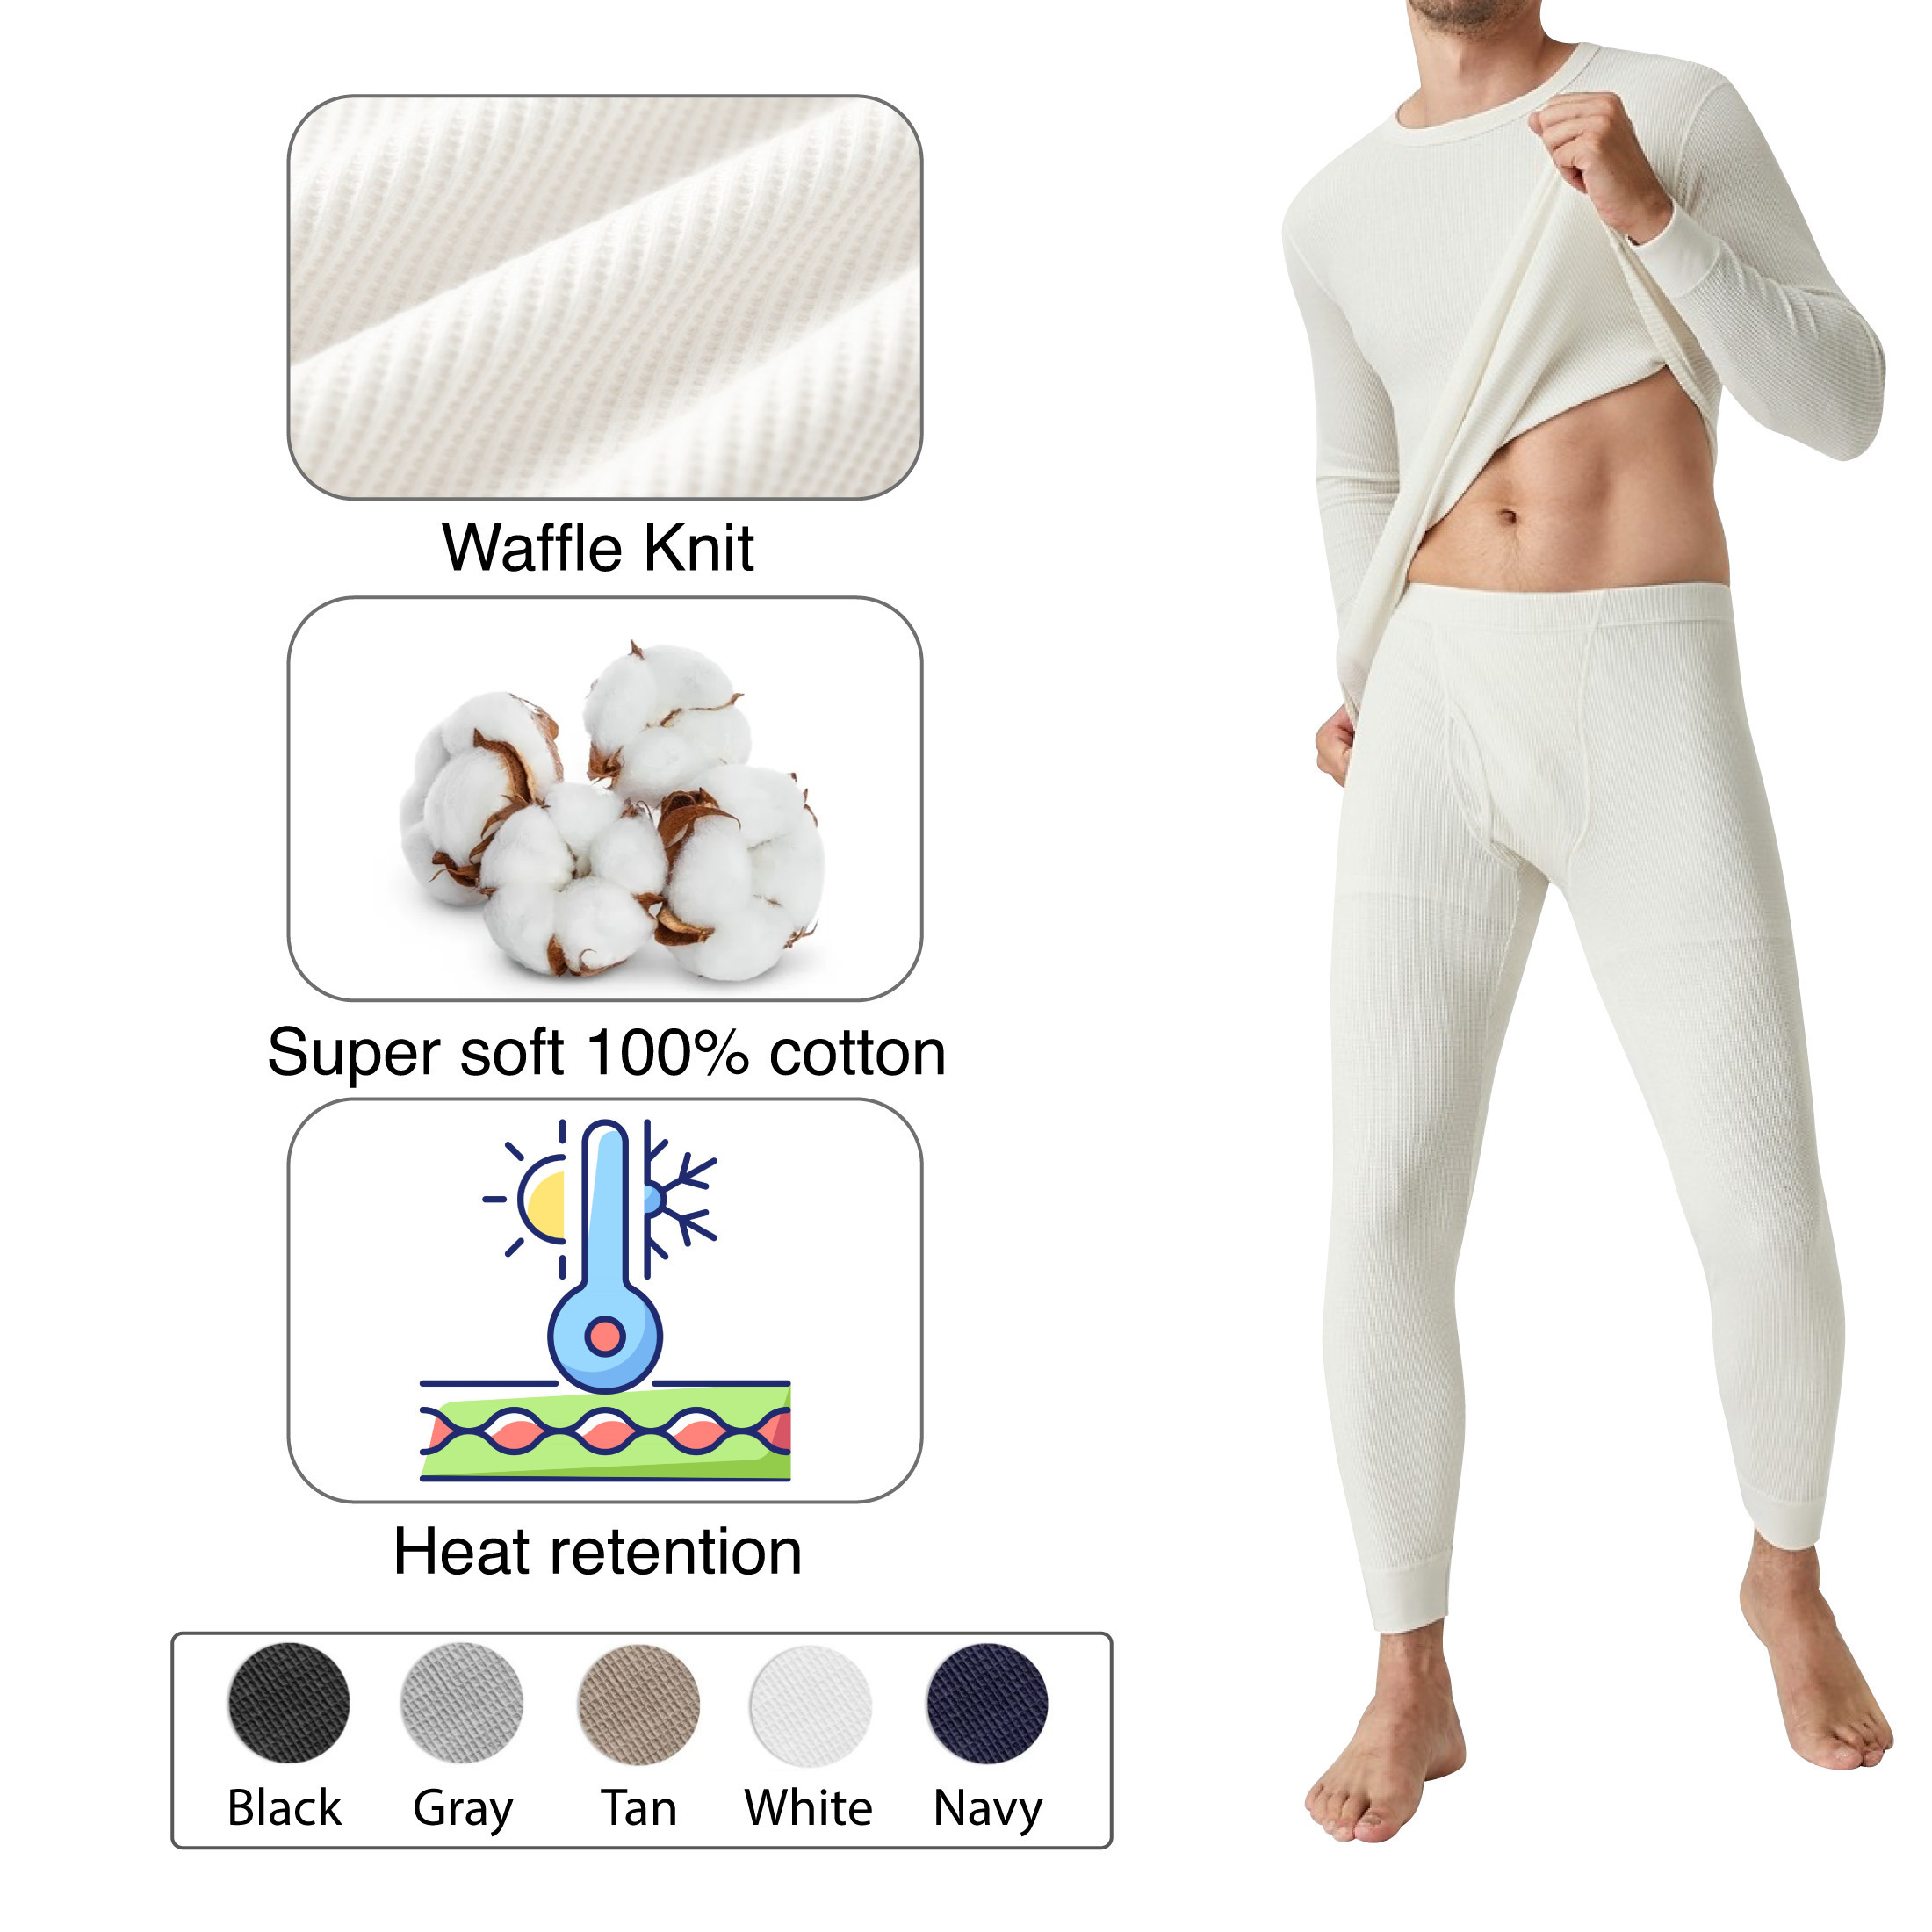 2-Piece: Men's Super Soft Cotton Waffle Knit Winter Thermal Underwear Set - Tan, 2X-Large